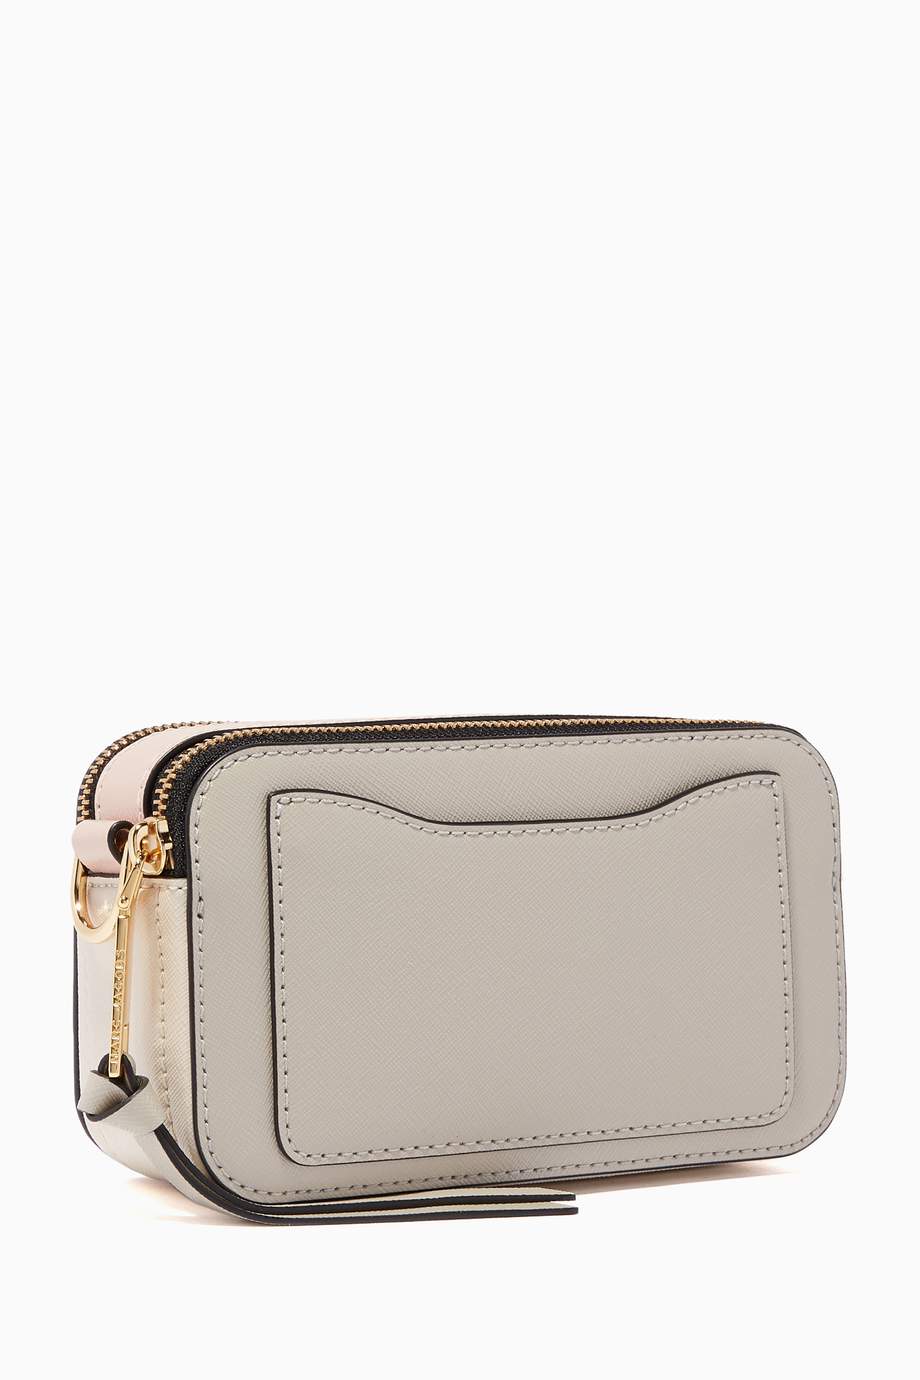 Shop The Marc Jacobs Neutral Beige Small Snapshot Shoulder Bag for Women | Ounass UAE